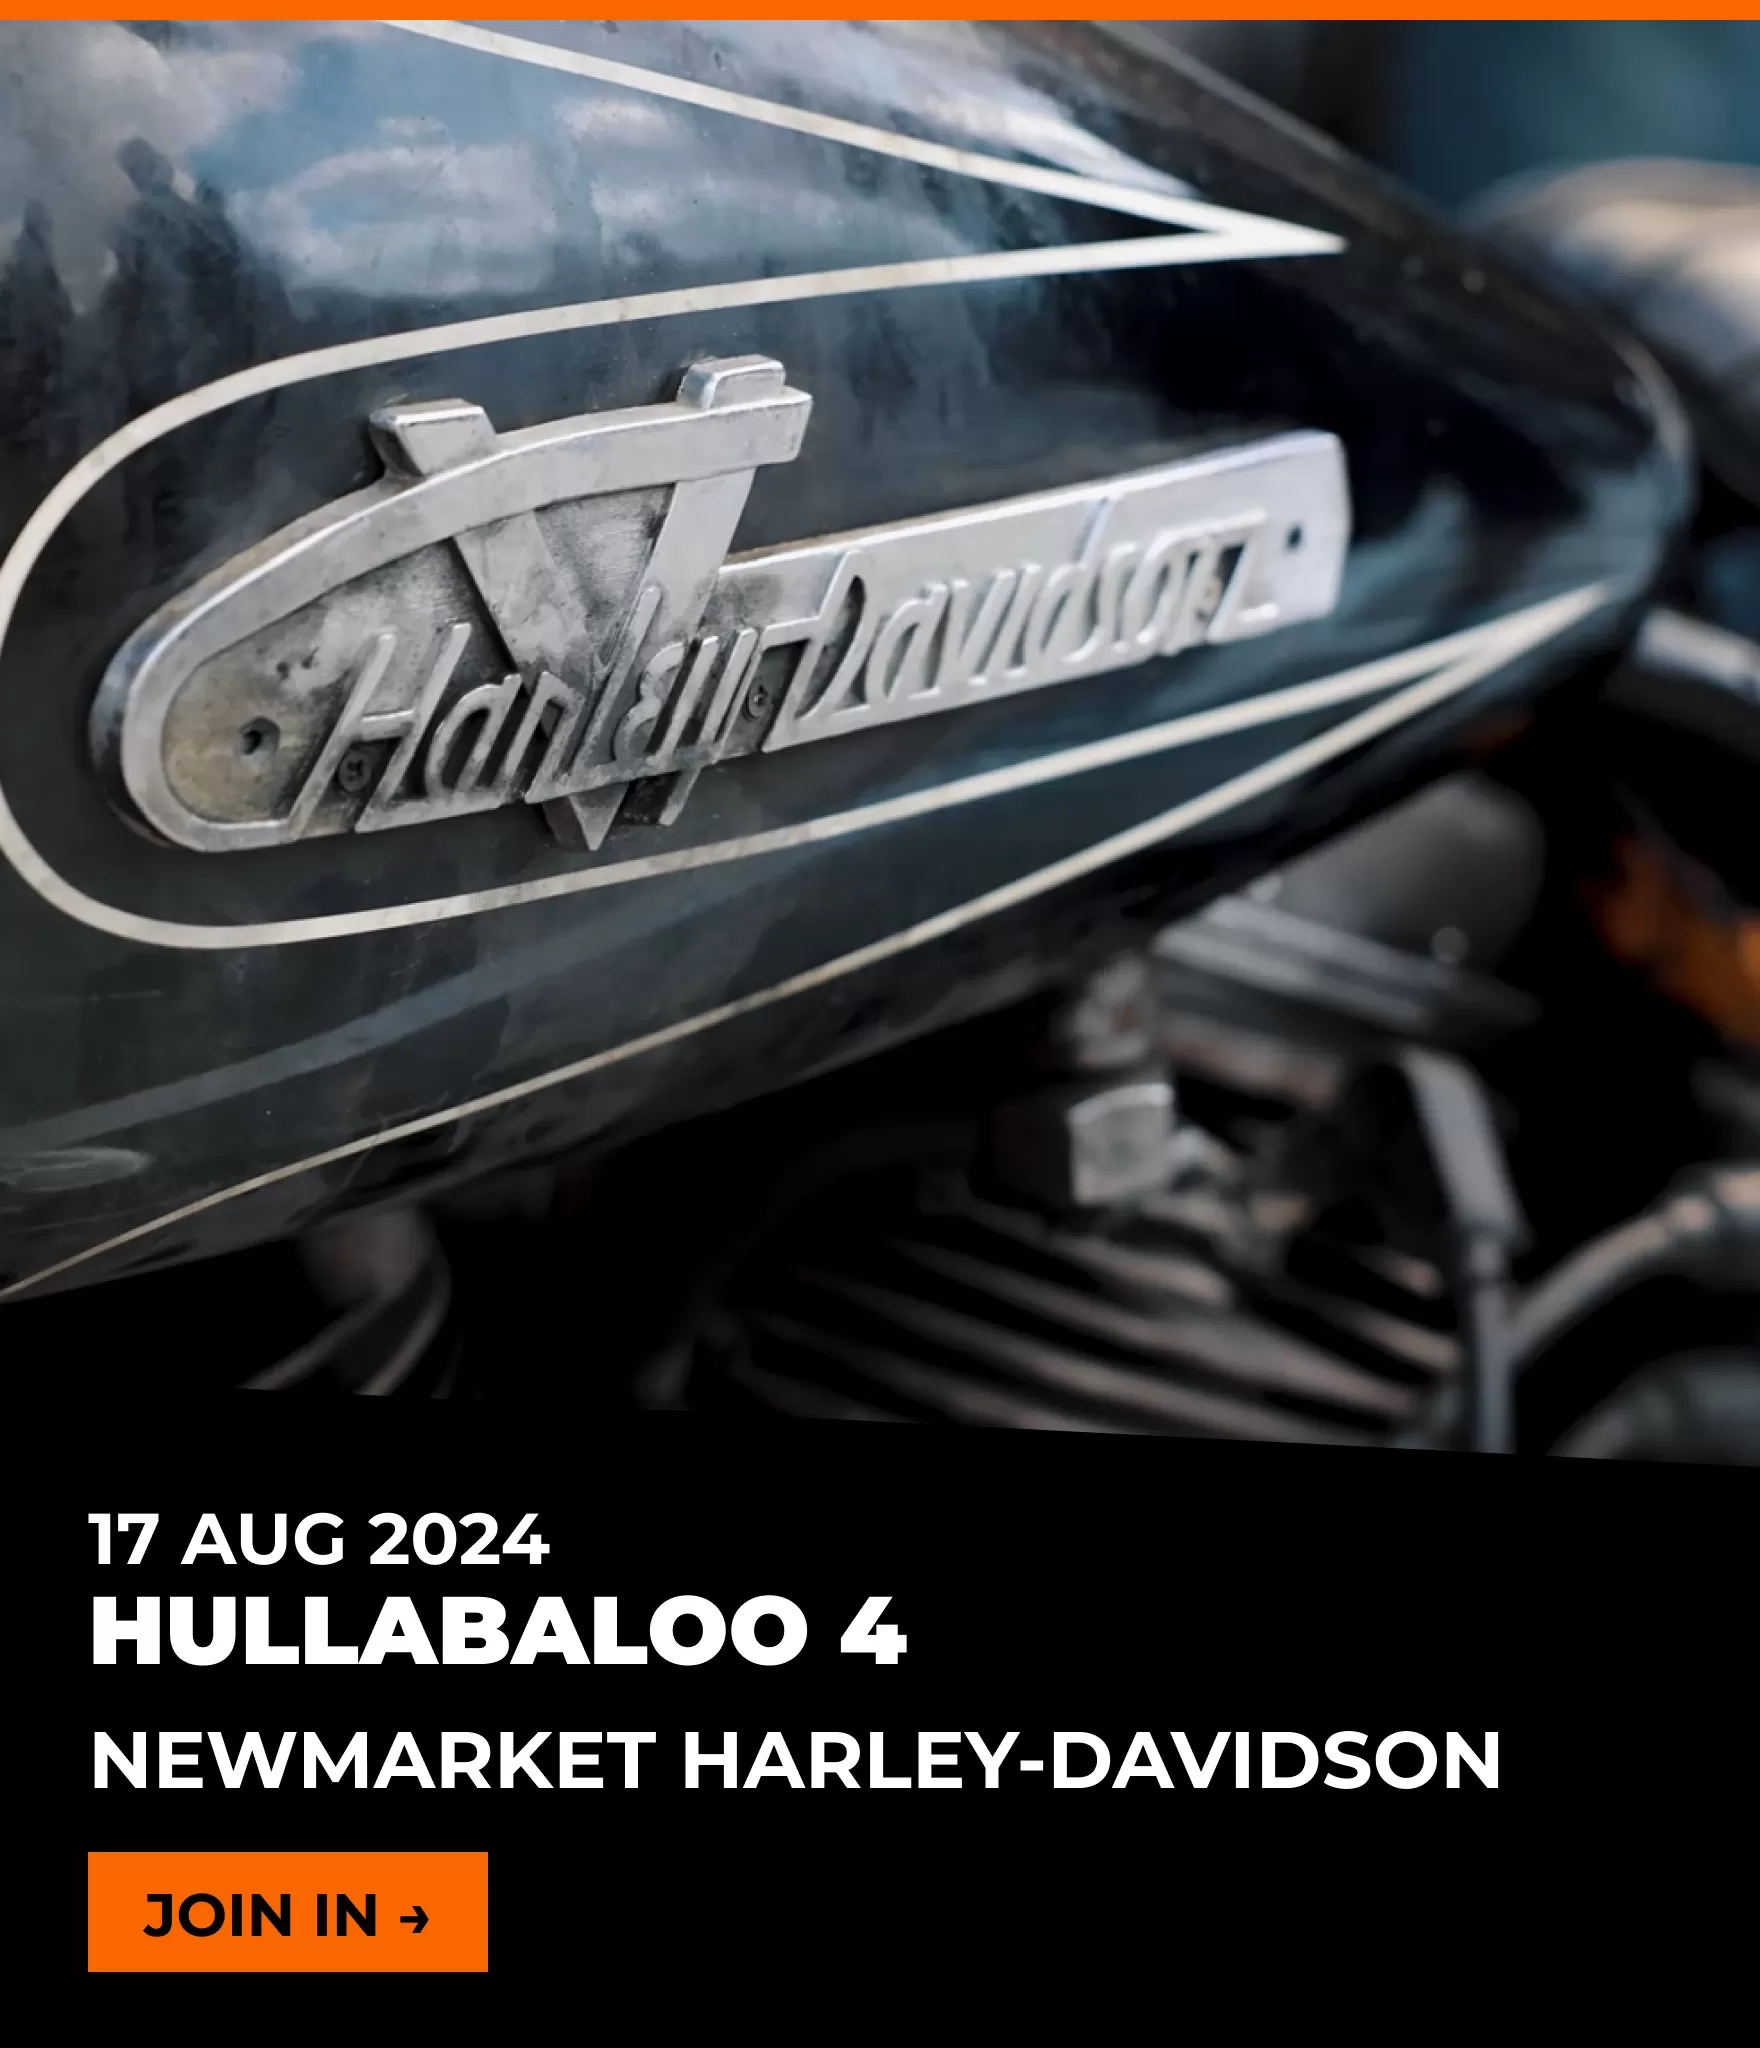 17 August 2024 - Hullabaloo 4 - Newmarket Harley-Davidson